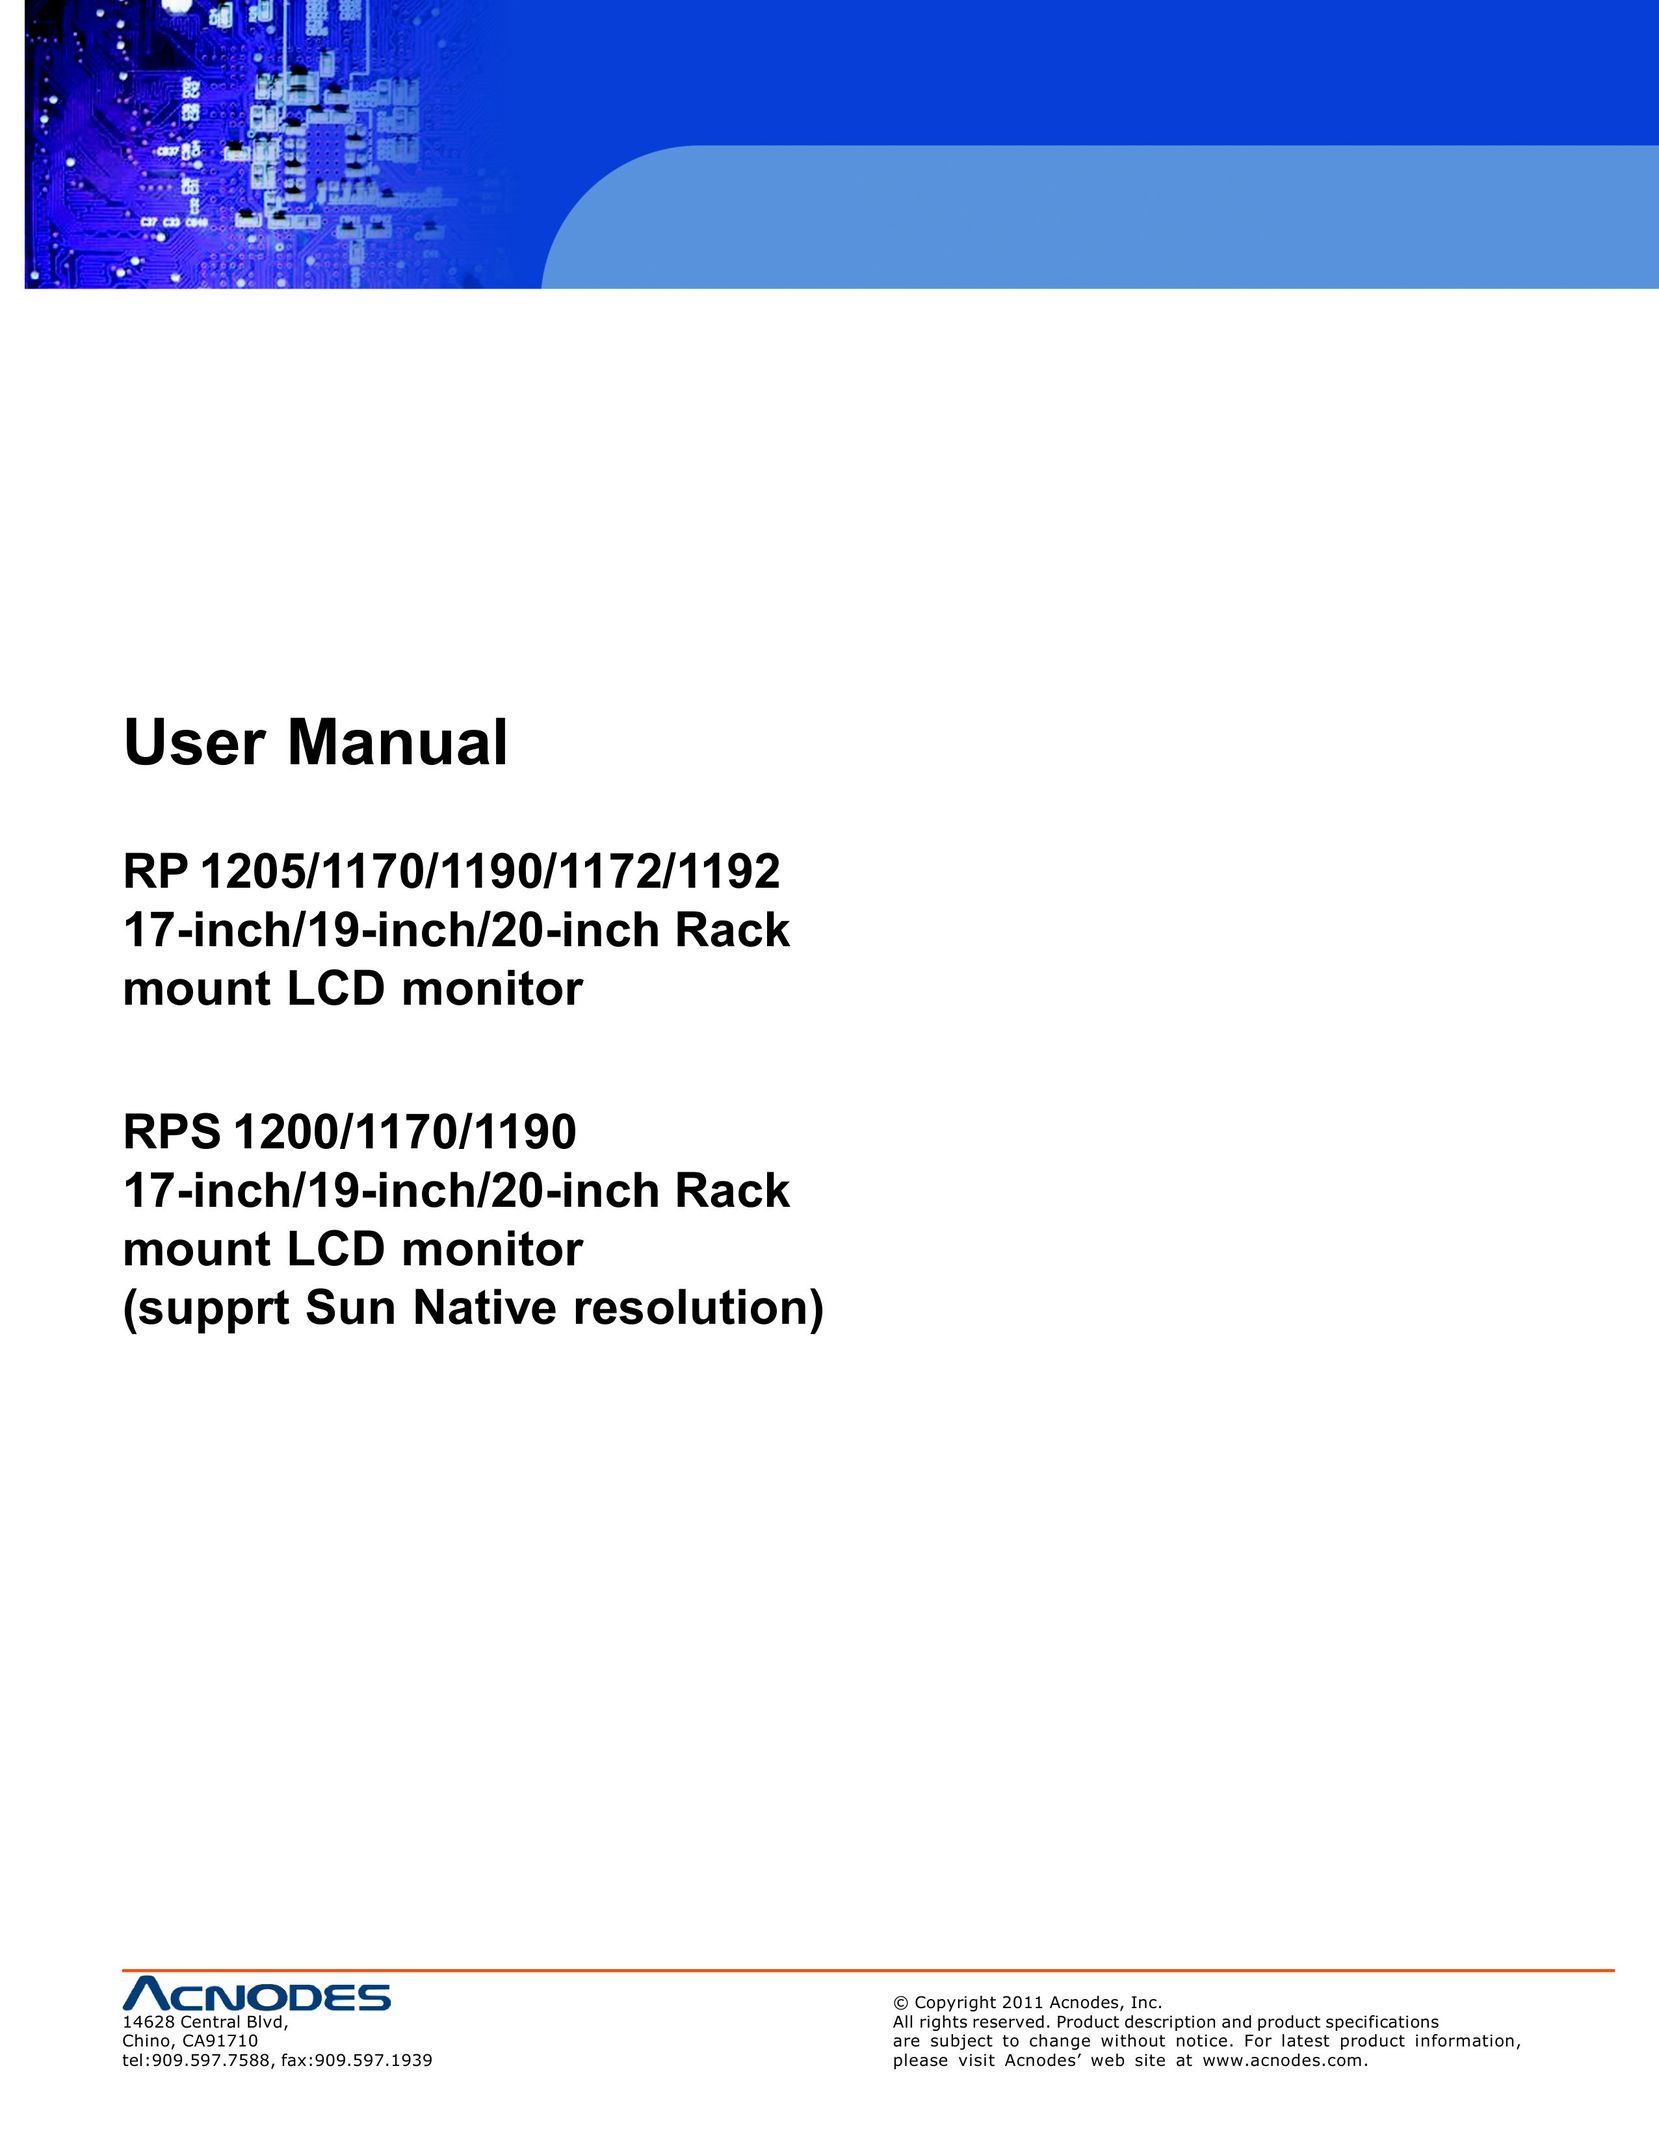 Acnodes RP 1170 Car Video System User Manual